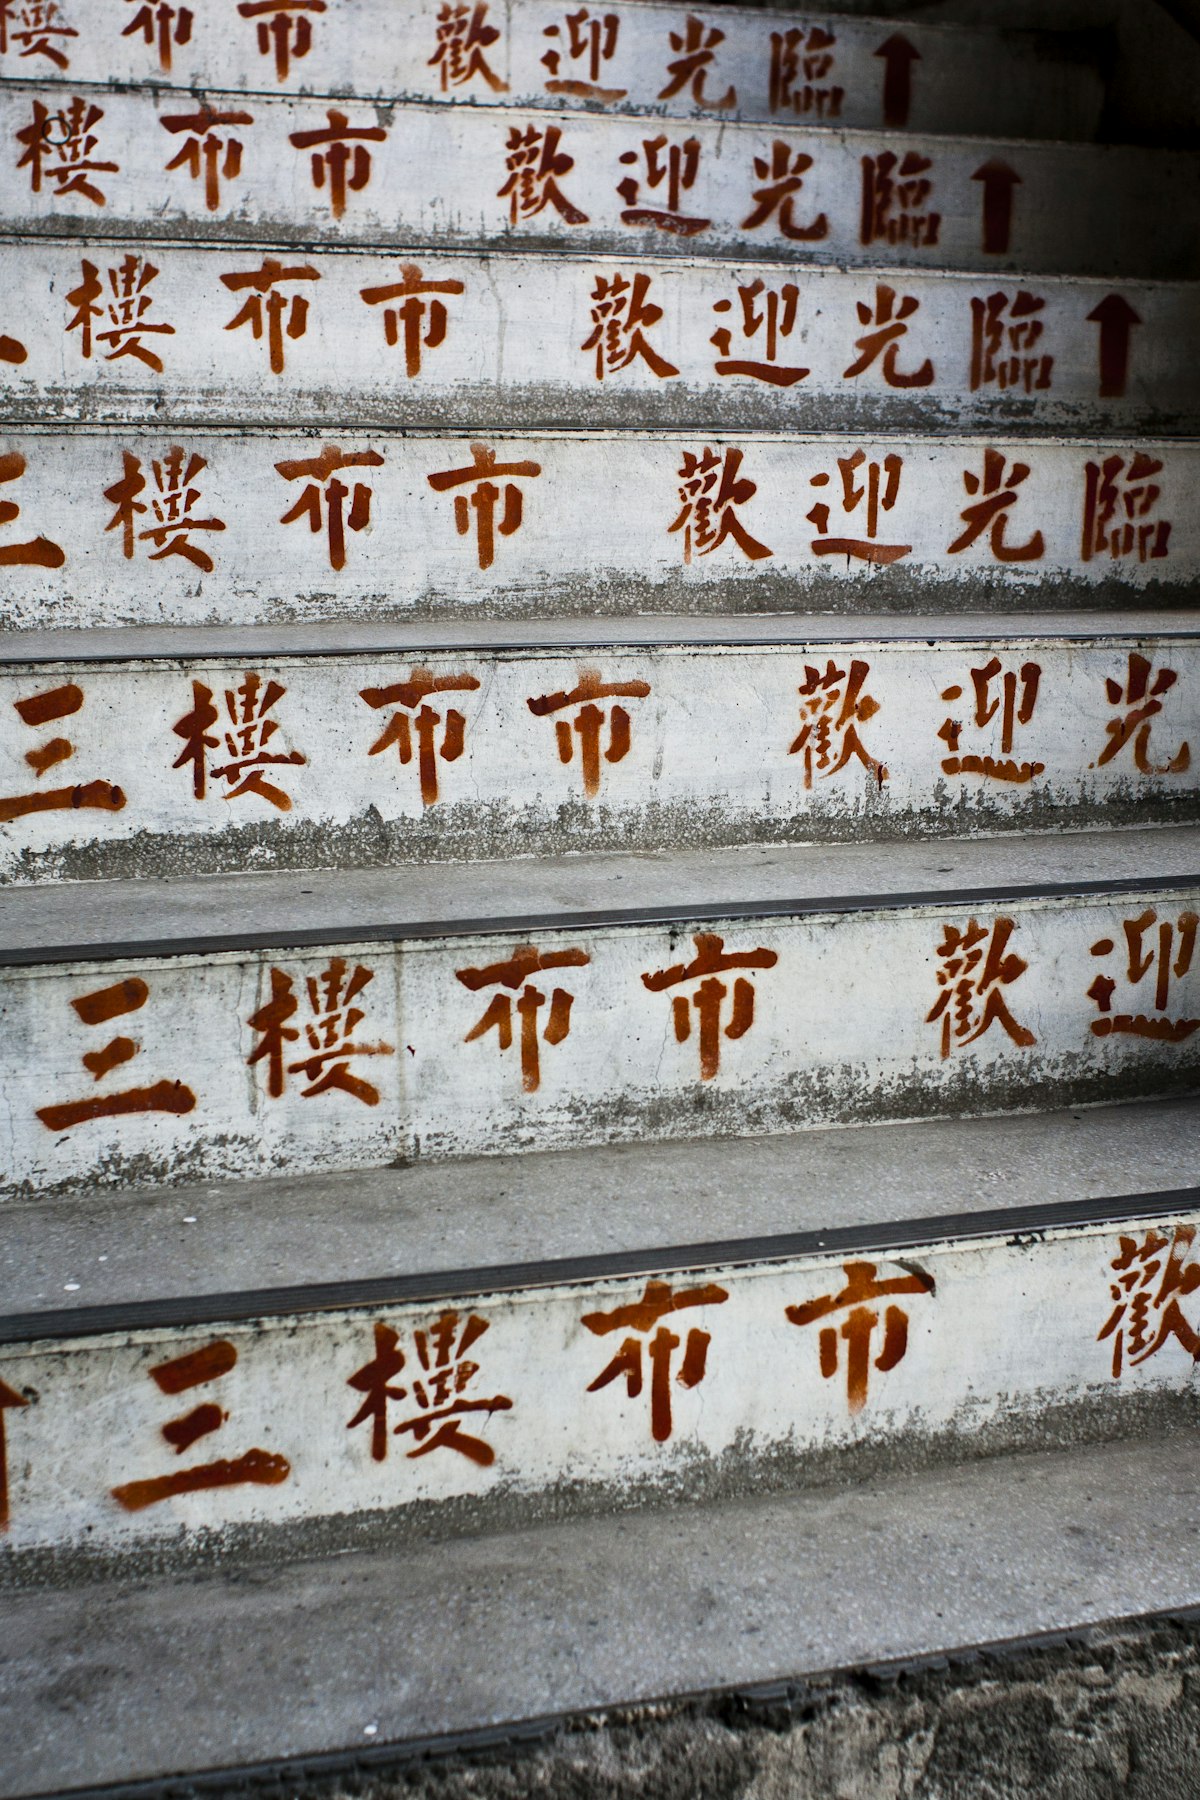 Stairway at Dihua Street Market